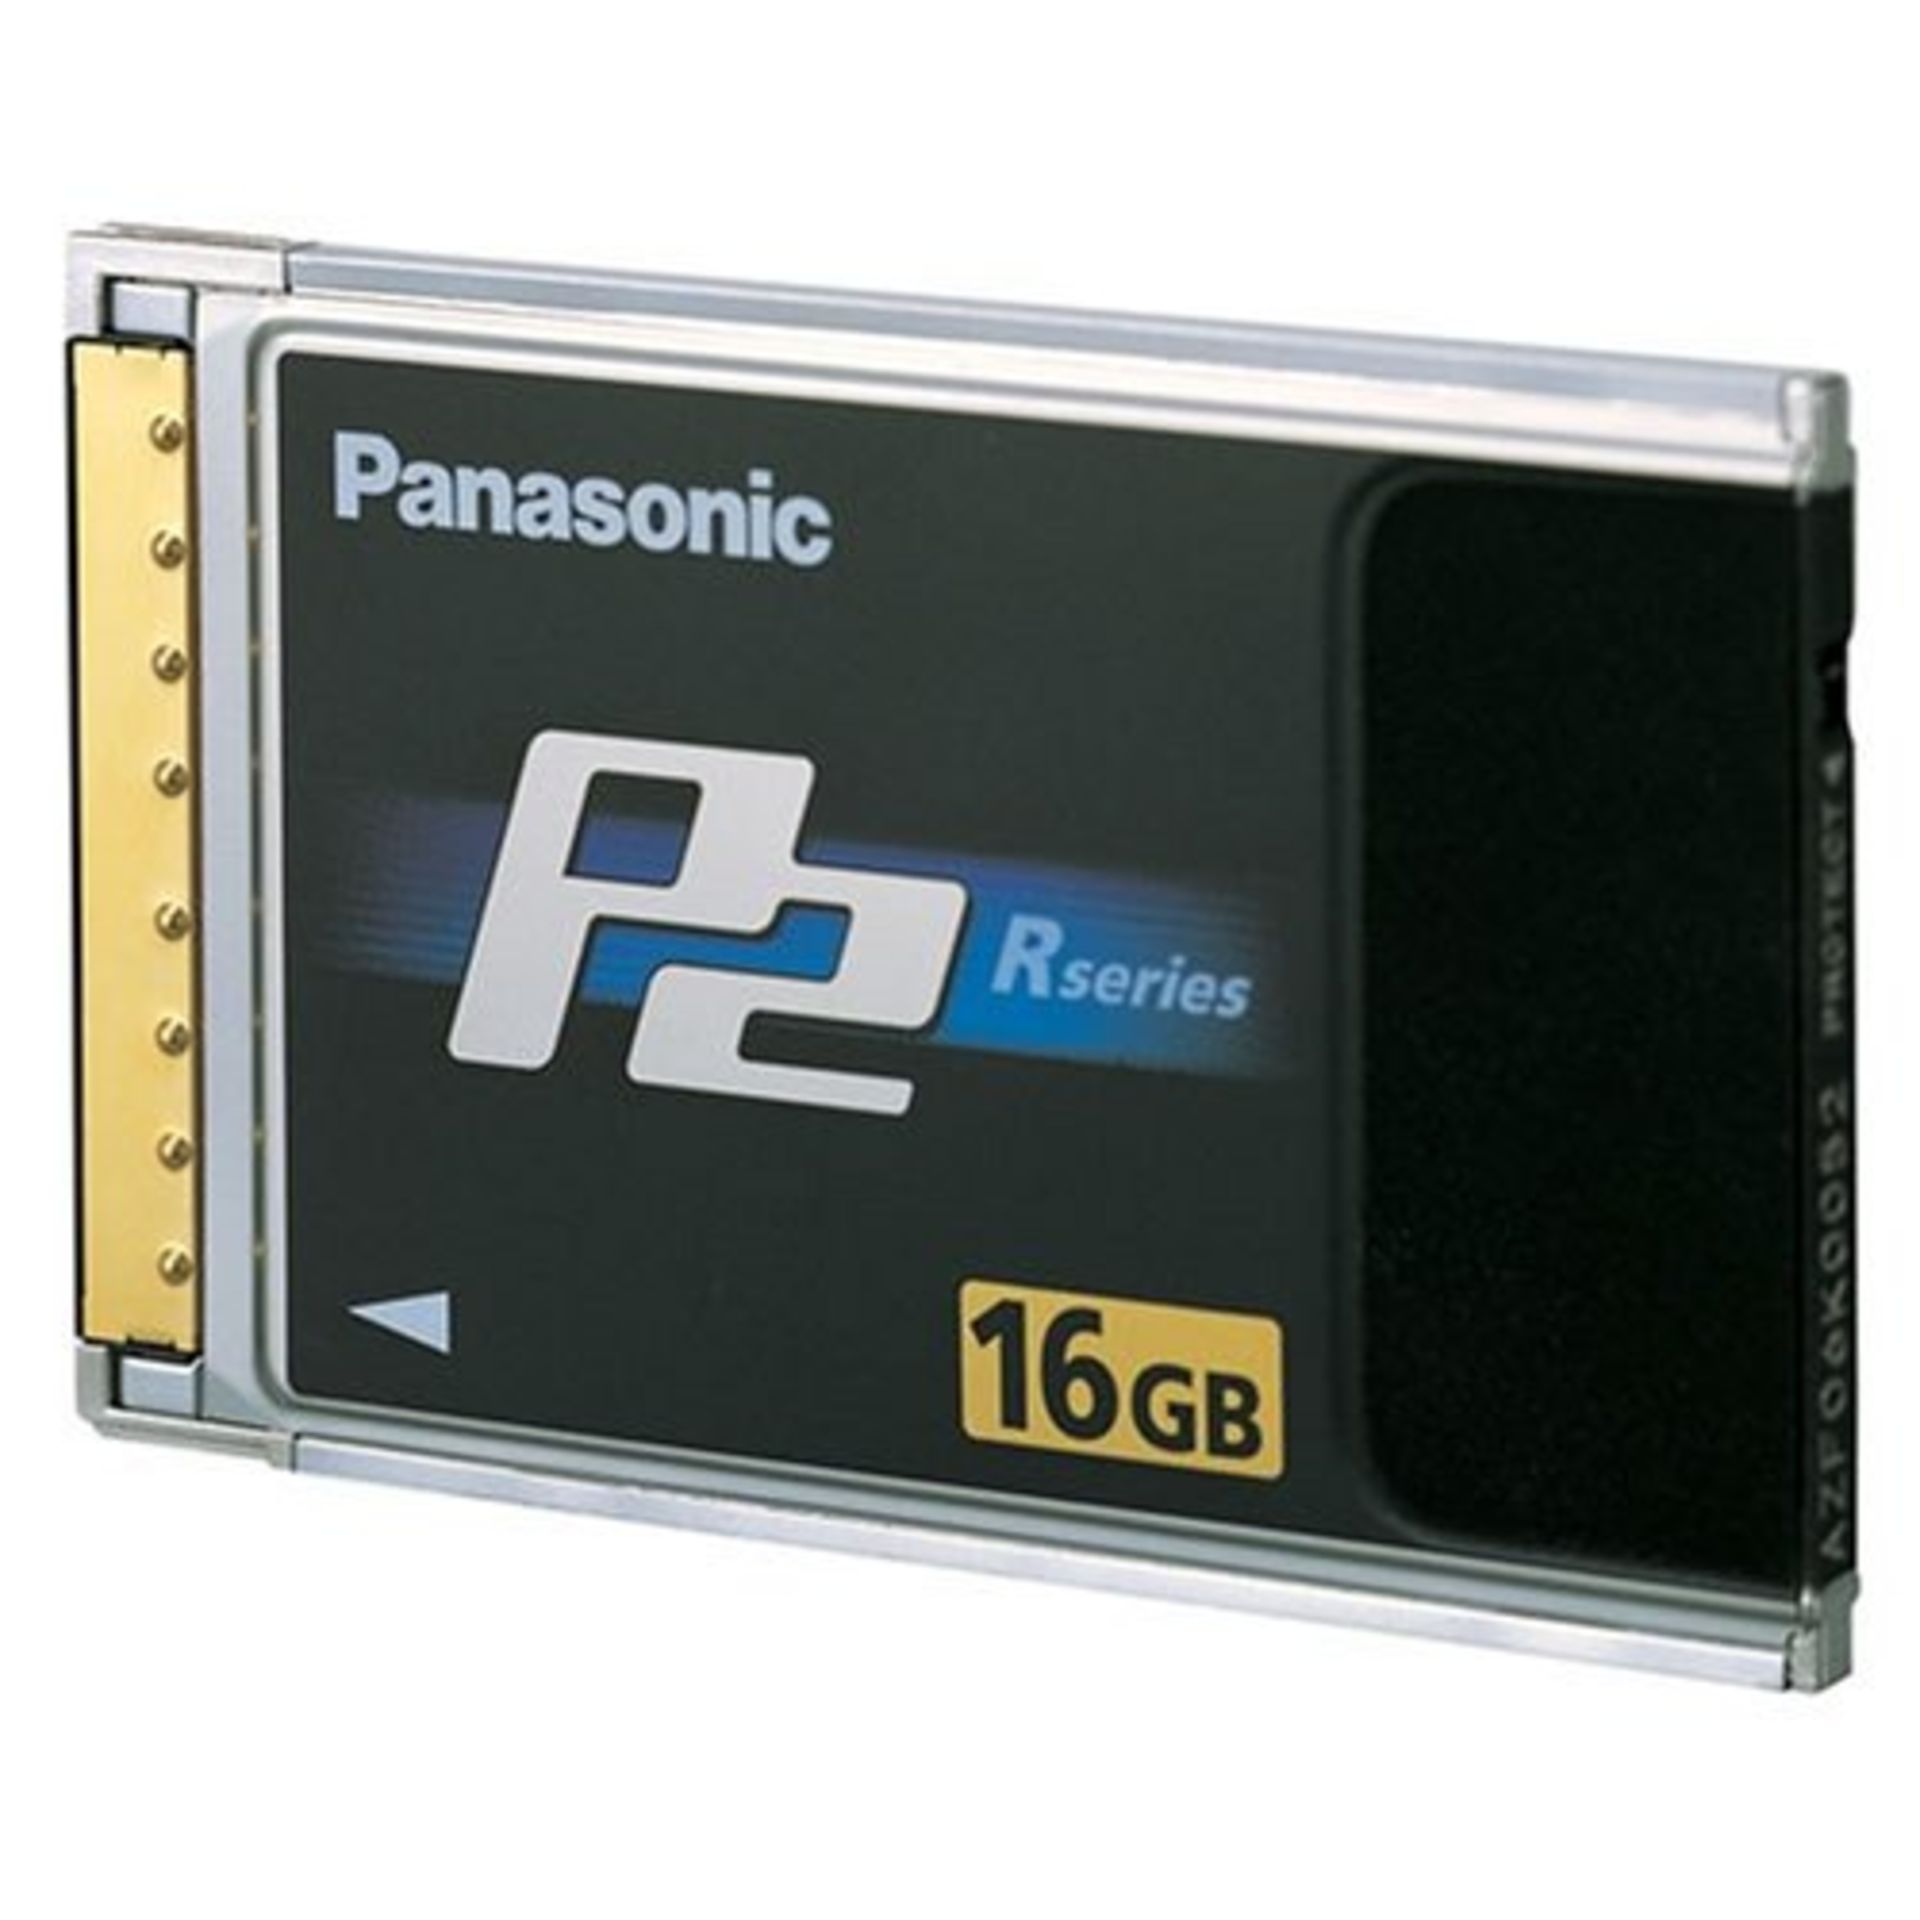 RRP £350.00 Panasonic P2 16GB RSeries card - Image 10 of 12